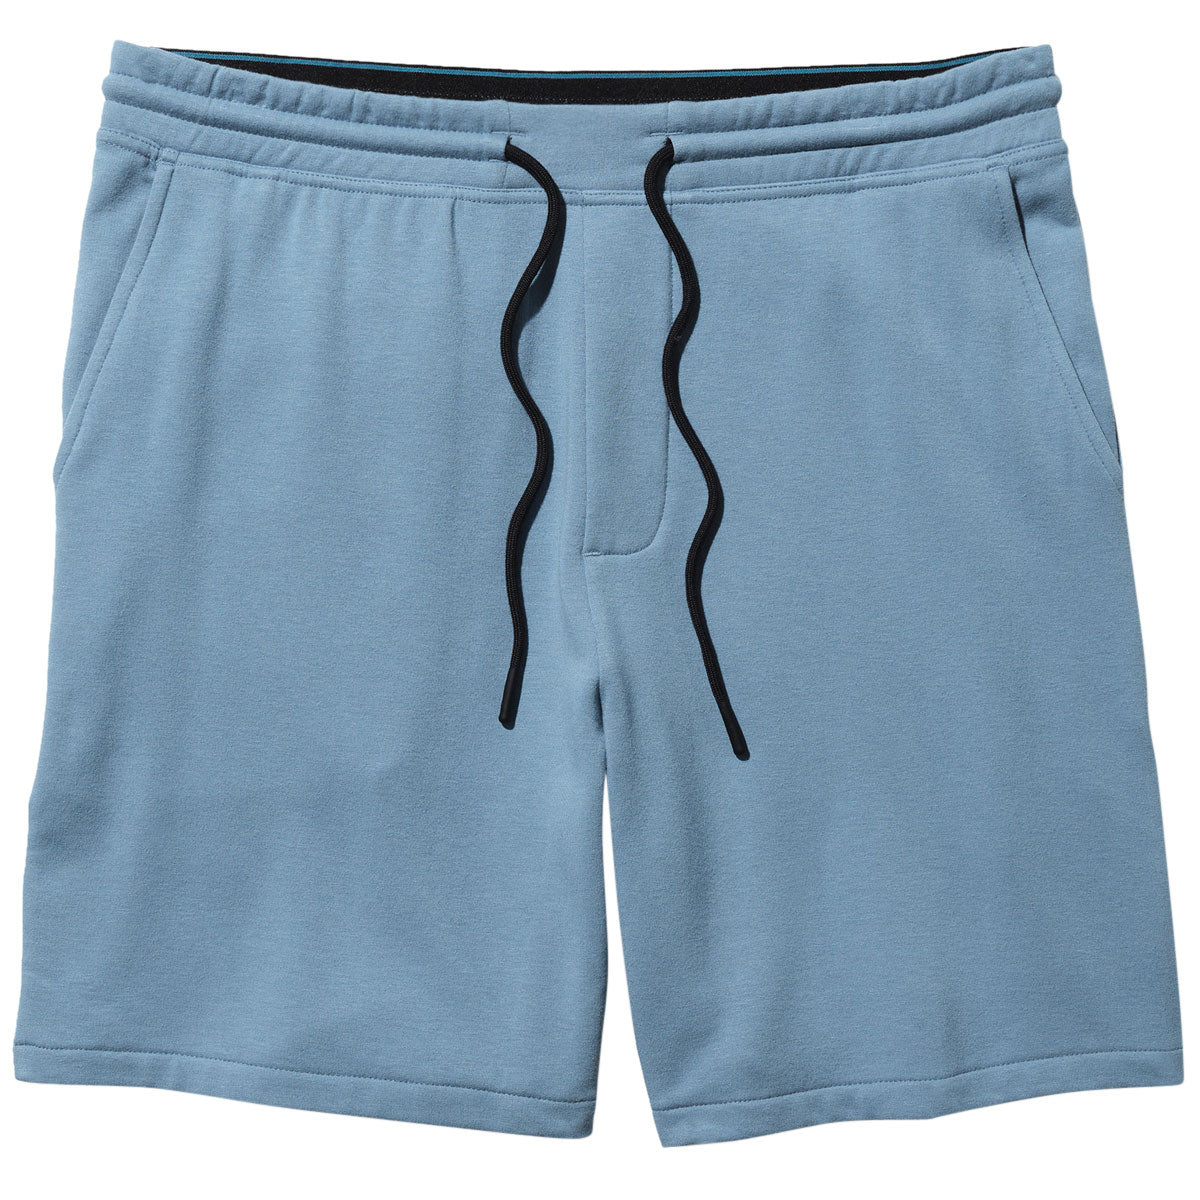 Stance Shelter Shorts - Blue image 1